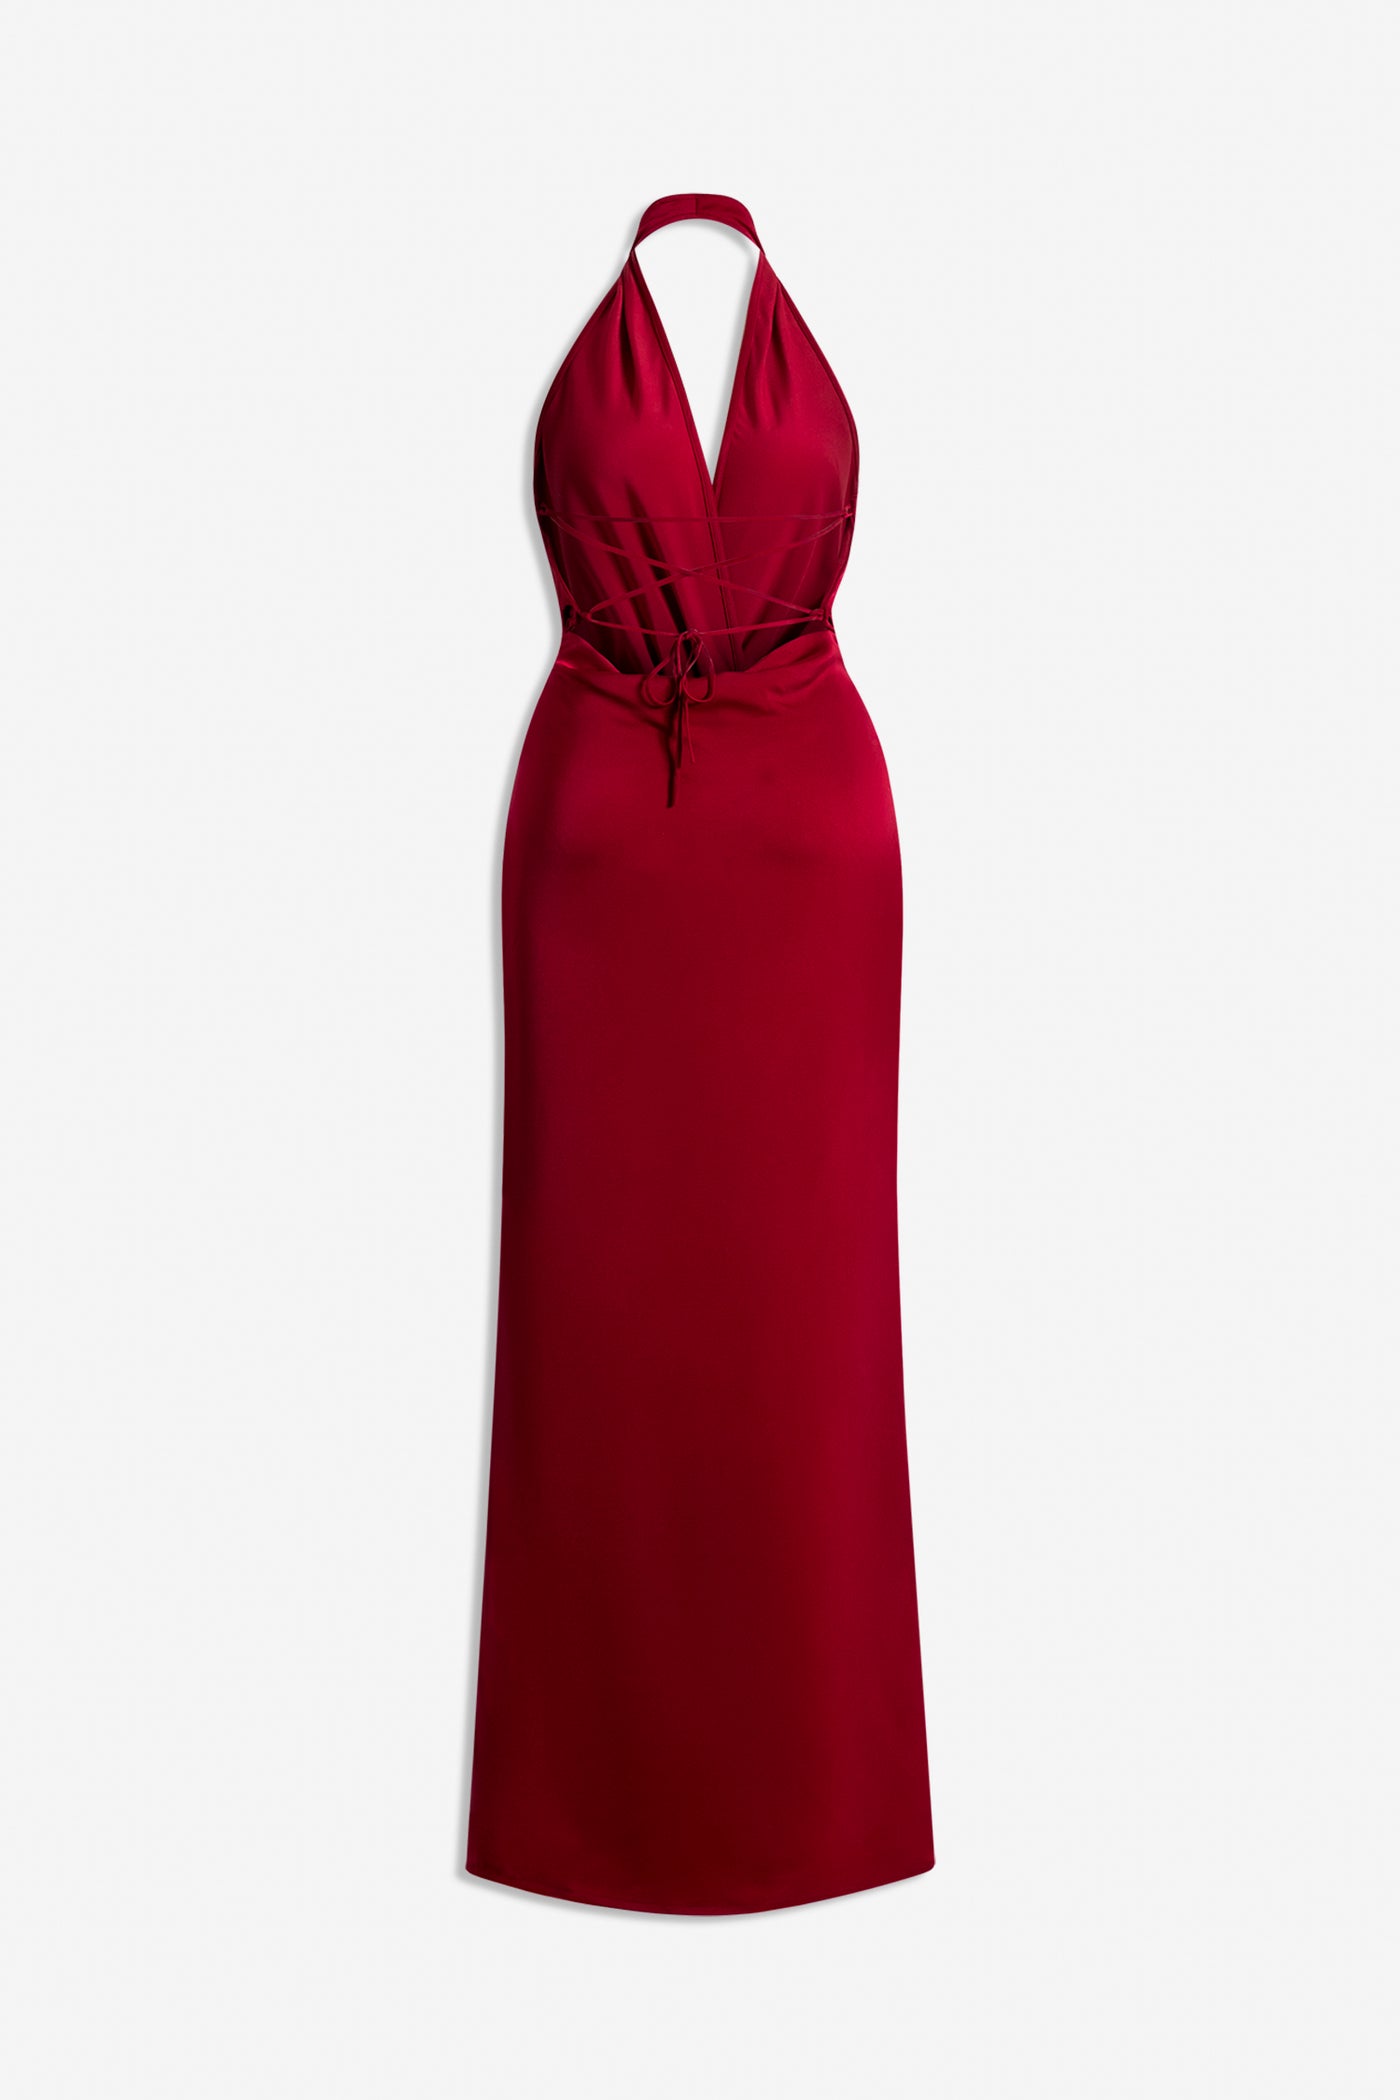 ROSSA DRESS - RED MND bestseller, dress, group_rossadress, newarrival, party